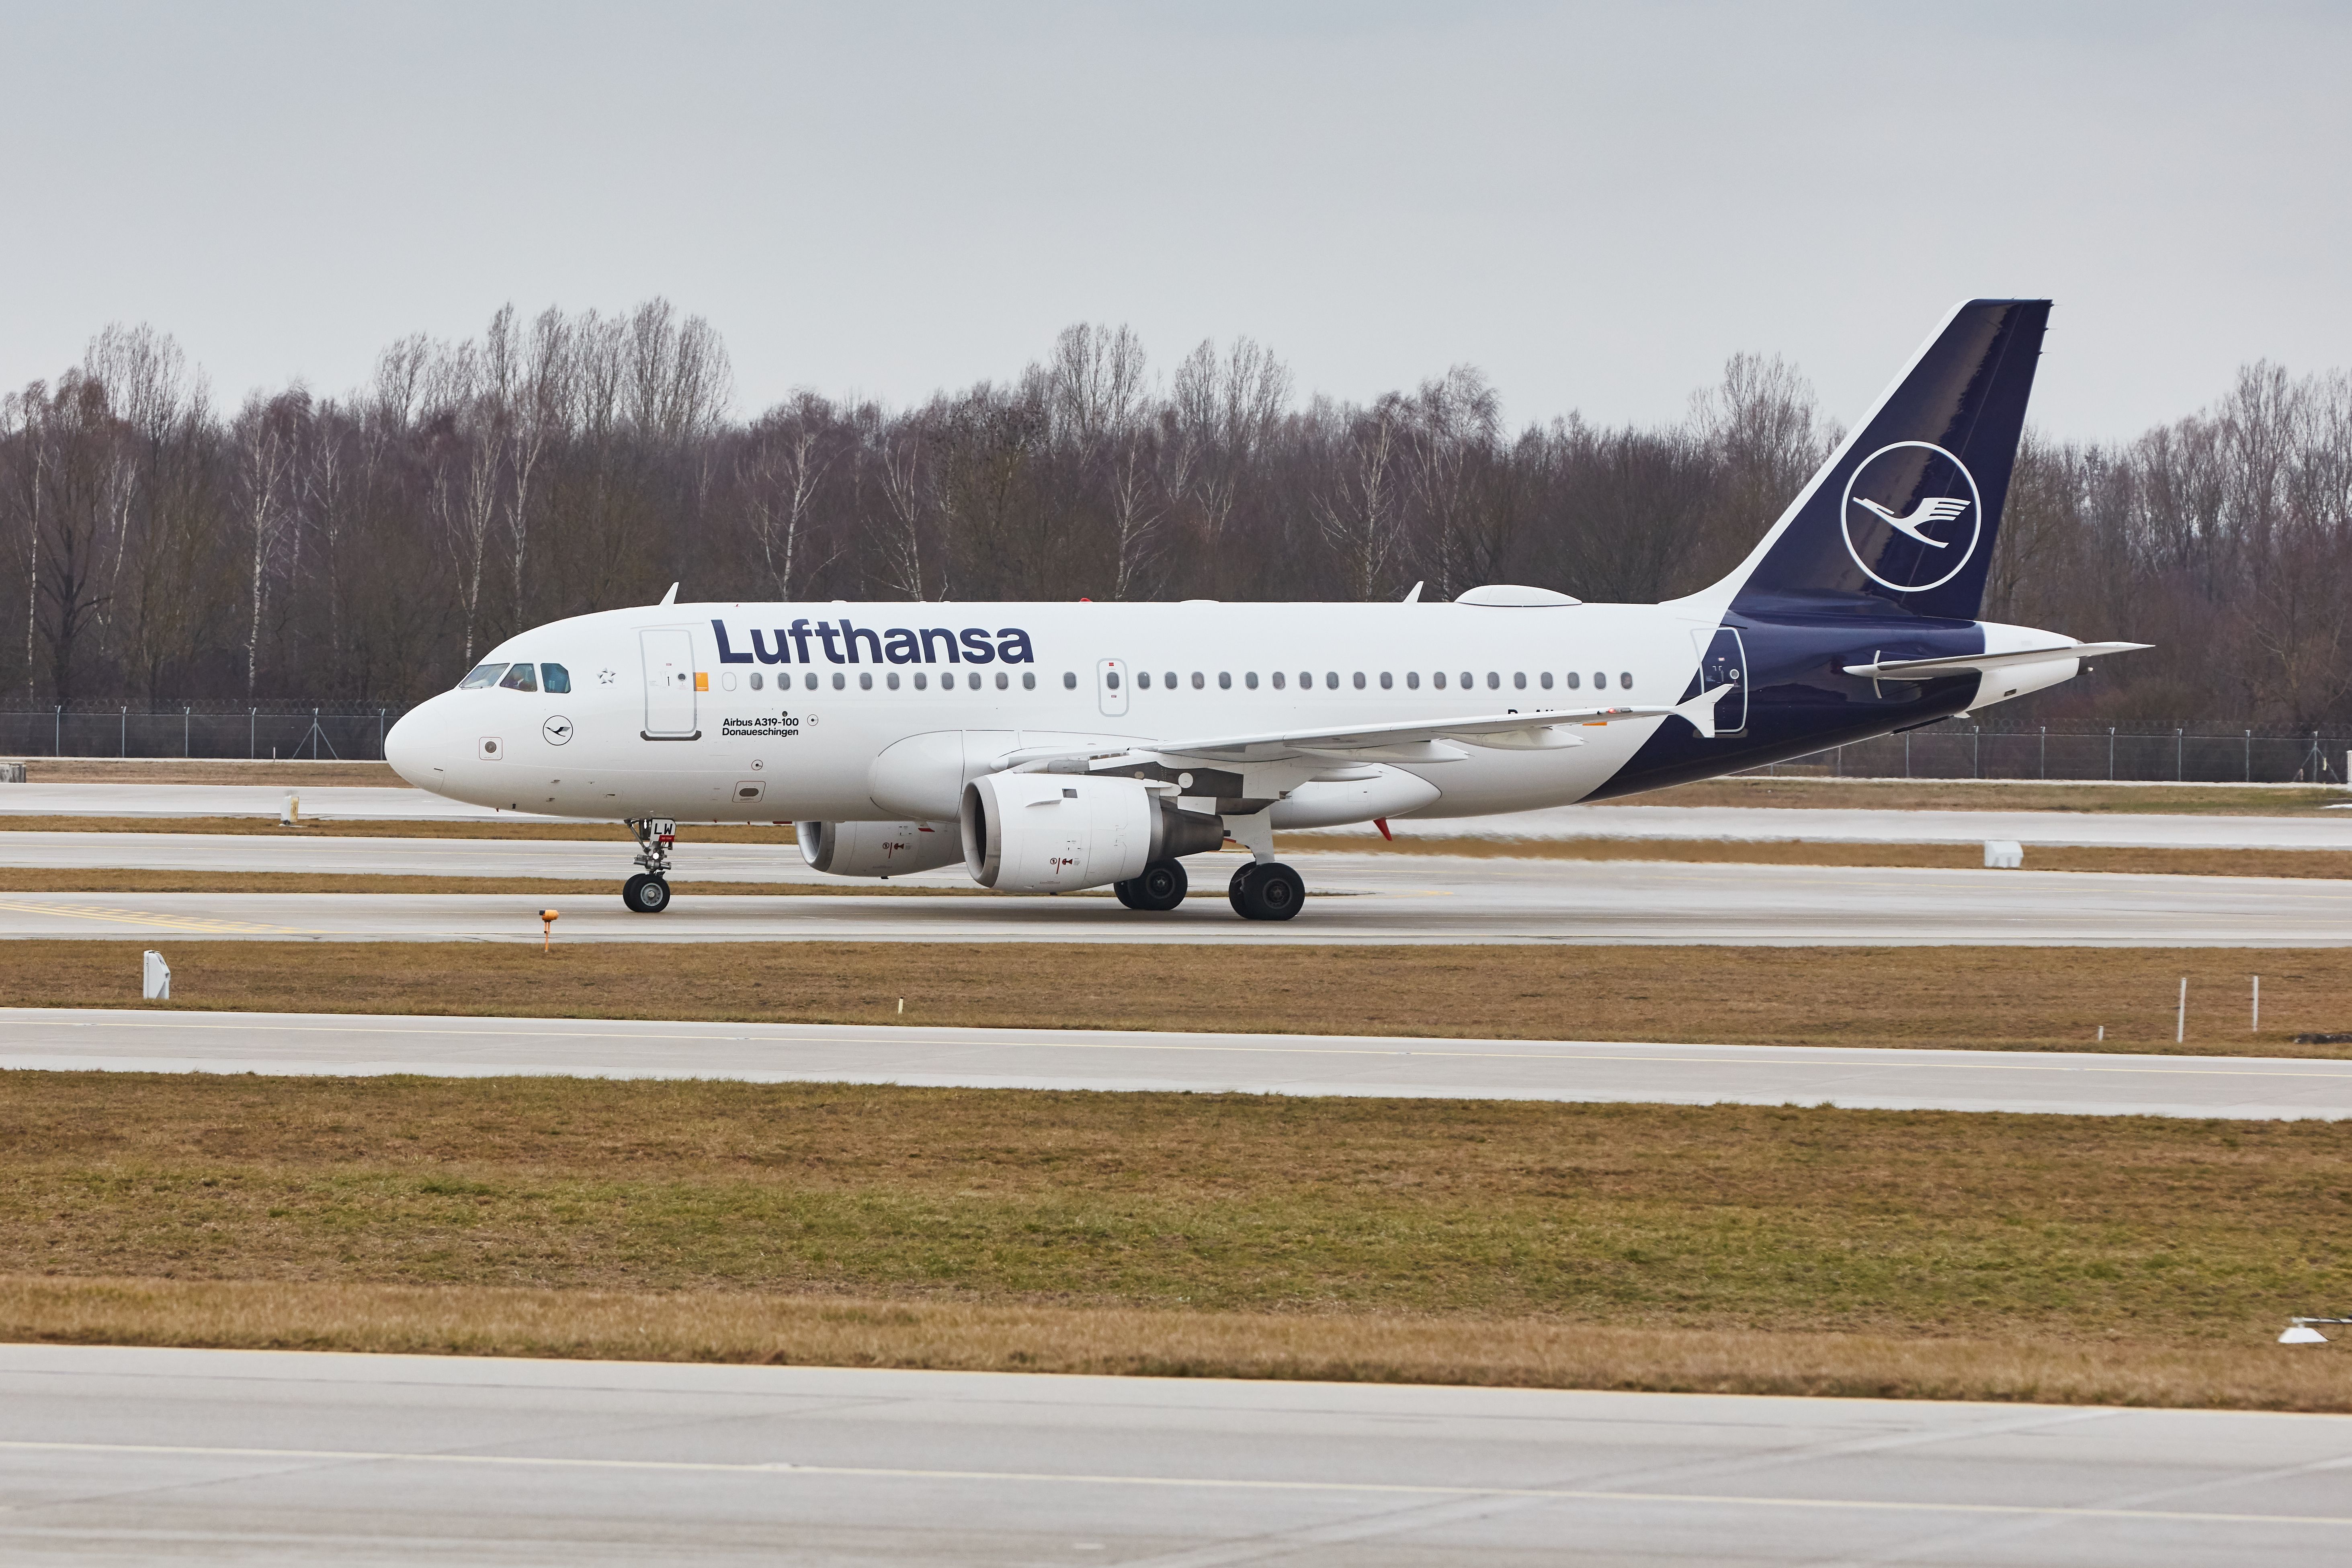 Lufthansa A319 on the runway